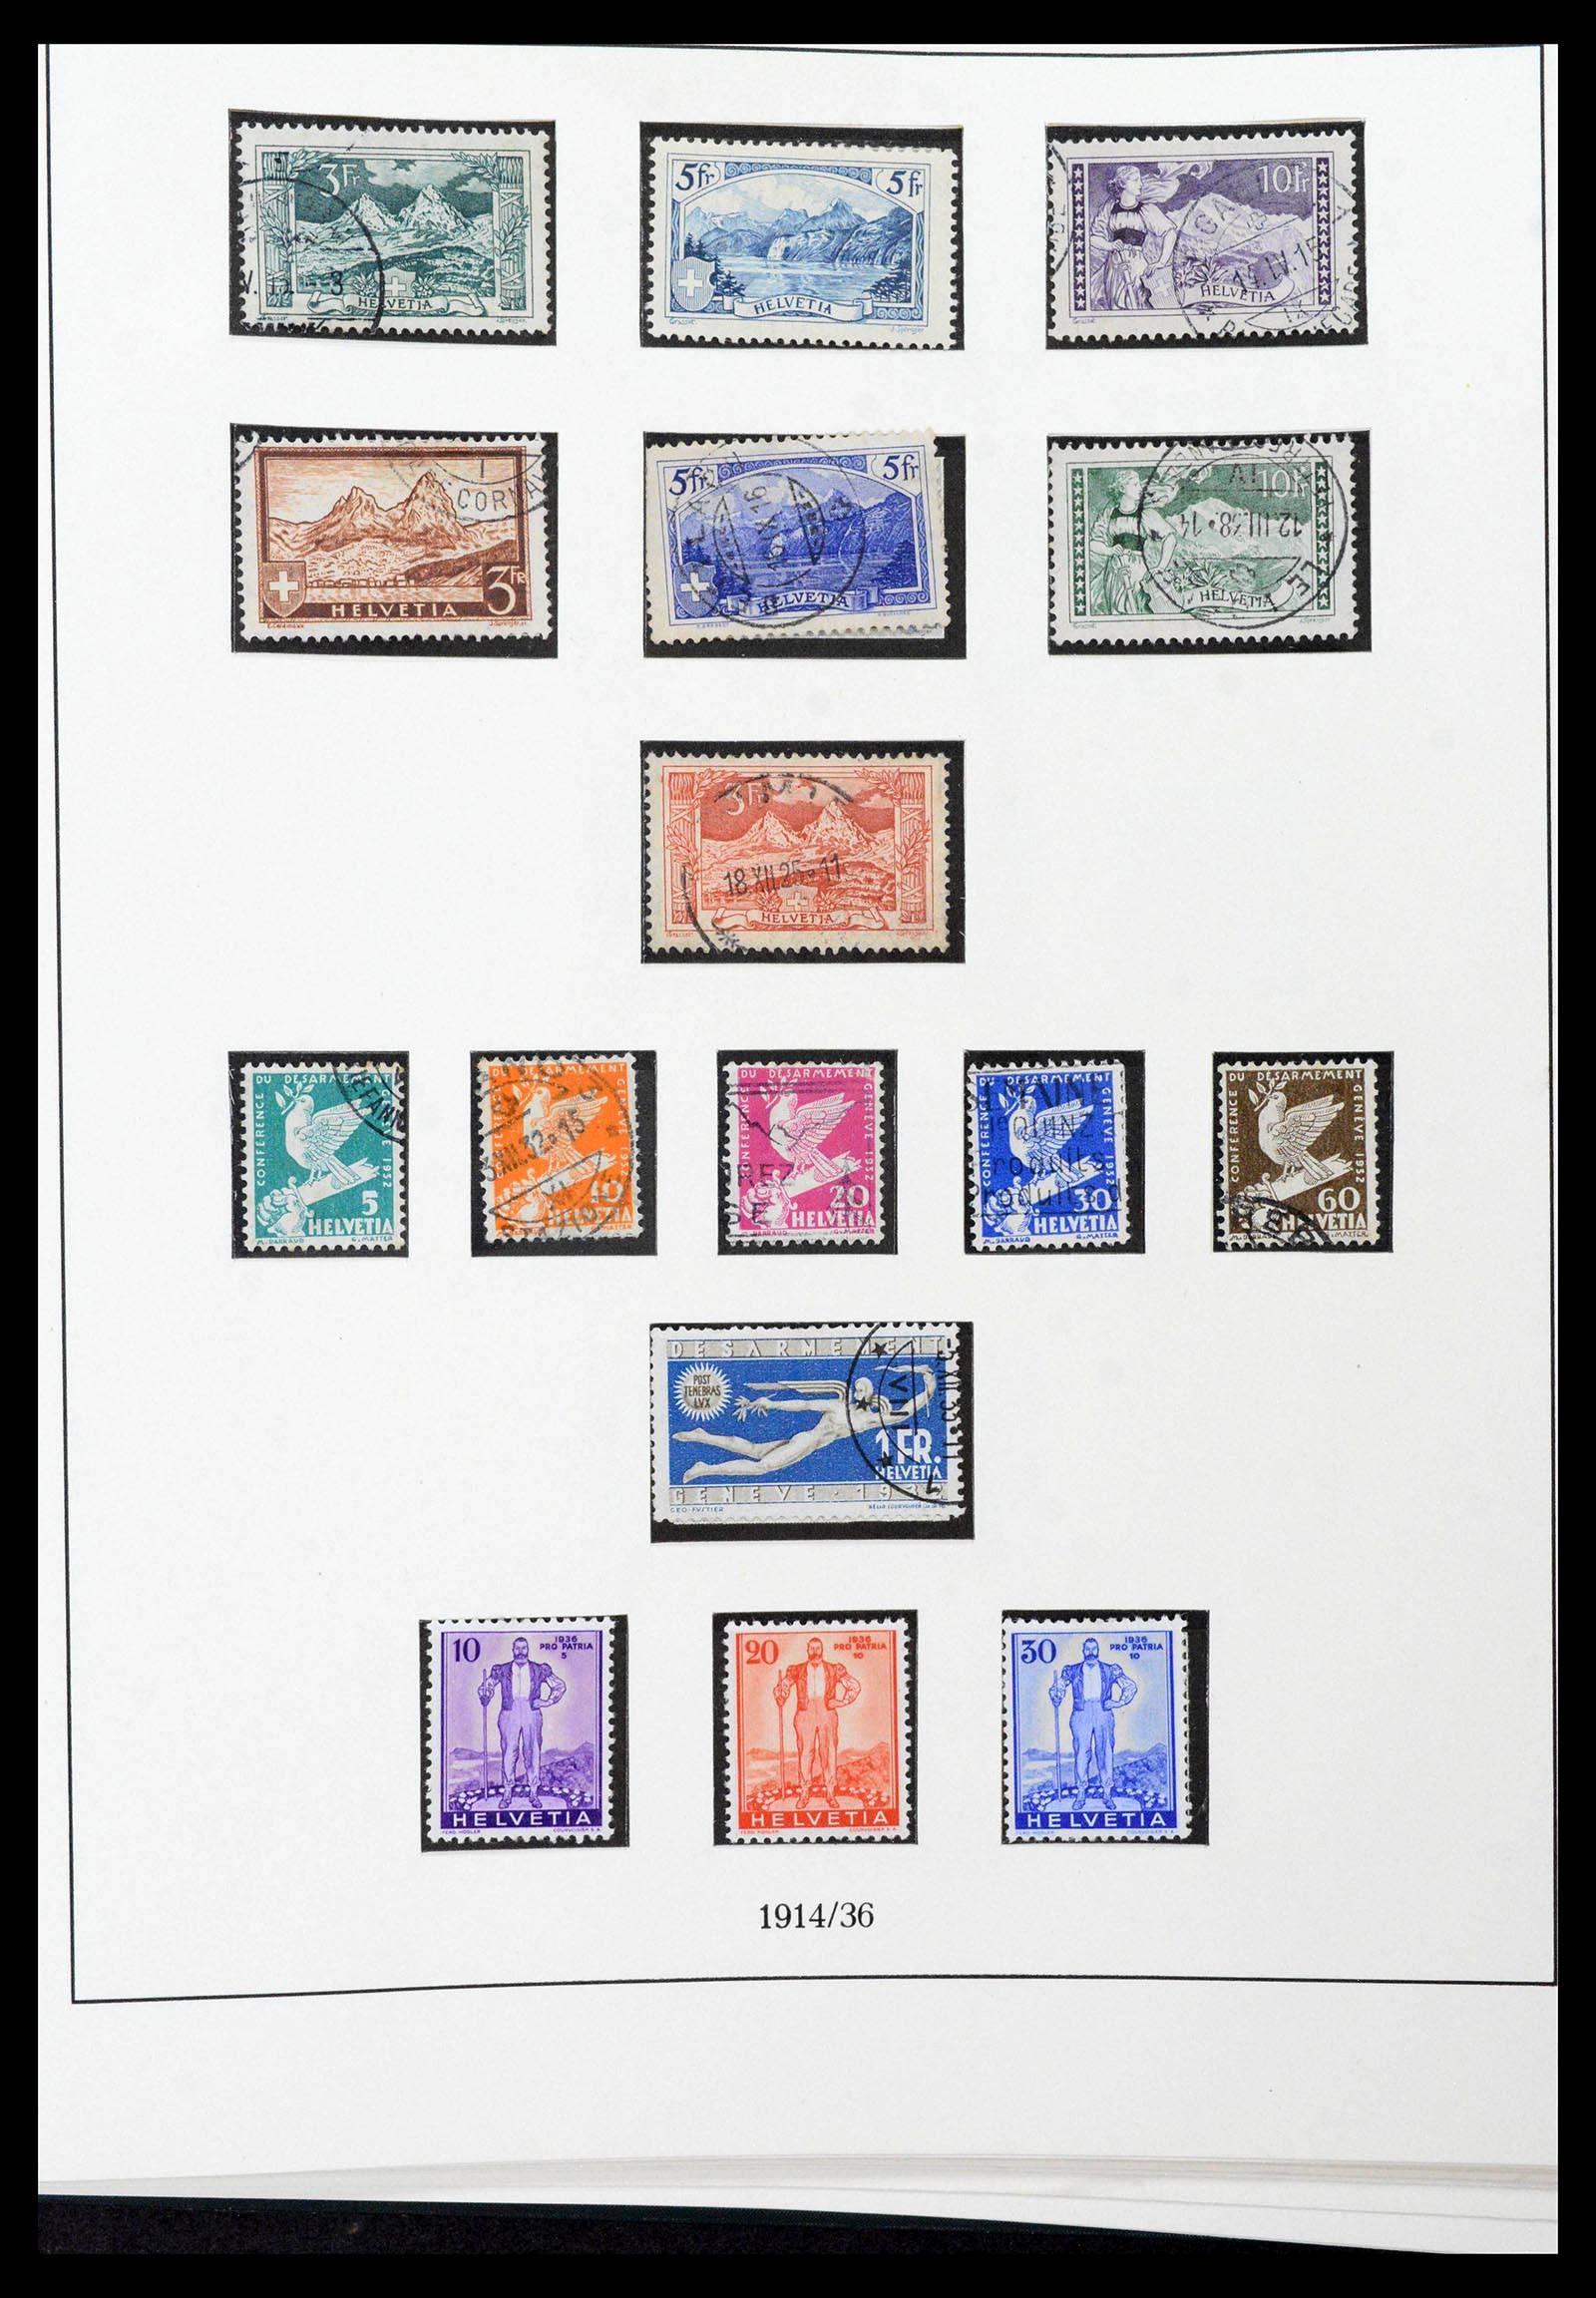 39235 0023 - Stamp collection 39235 Switzerland 1843-1960.